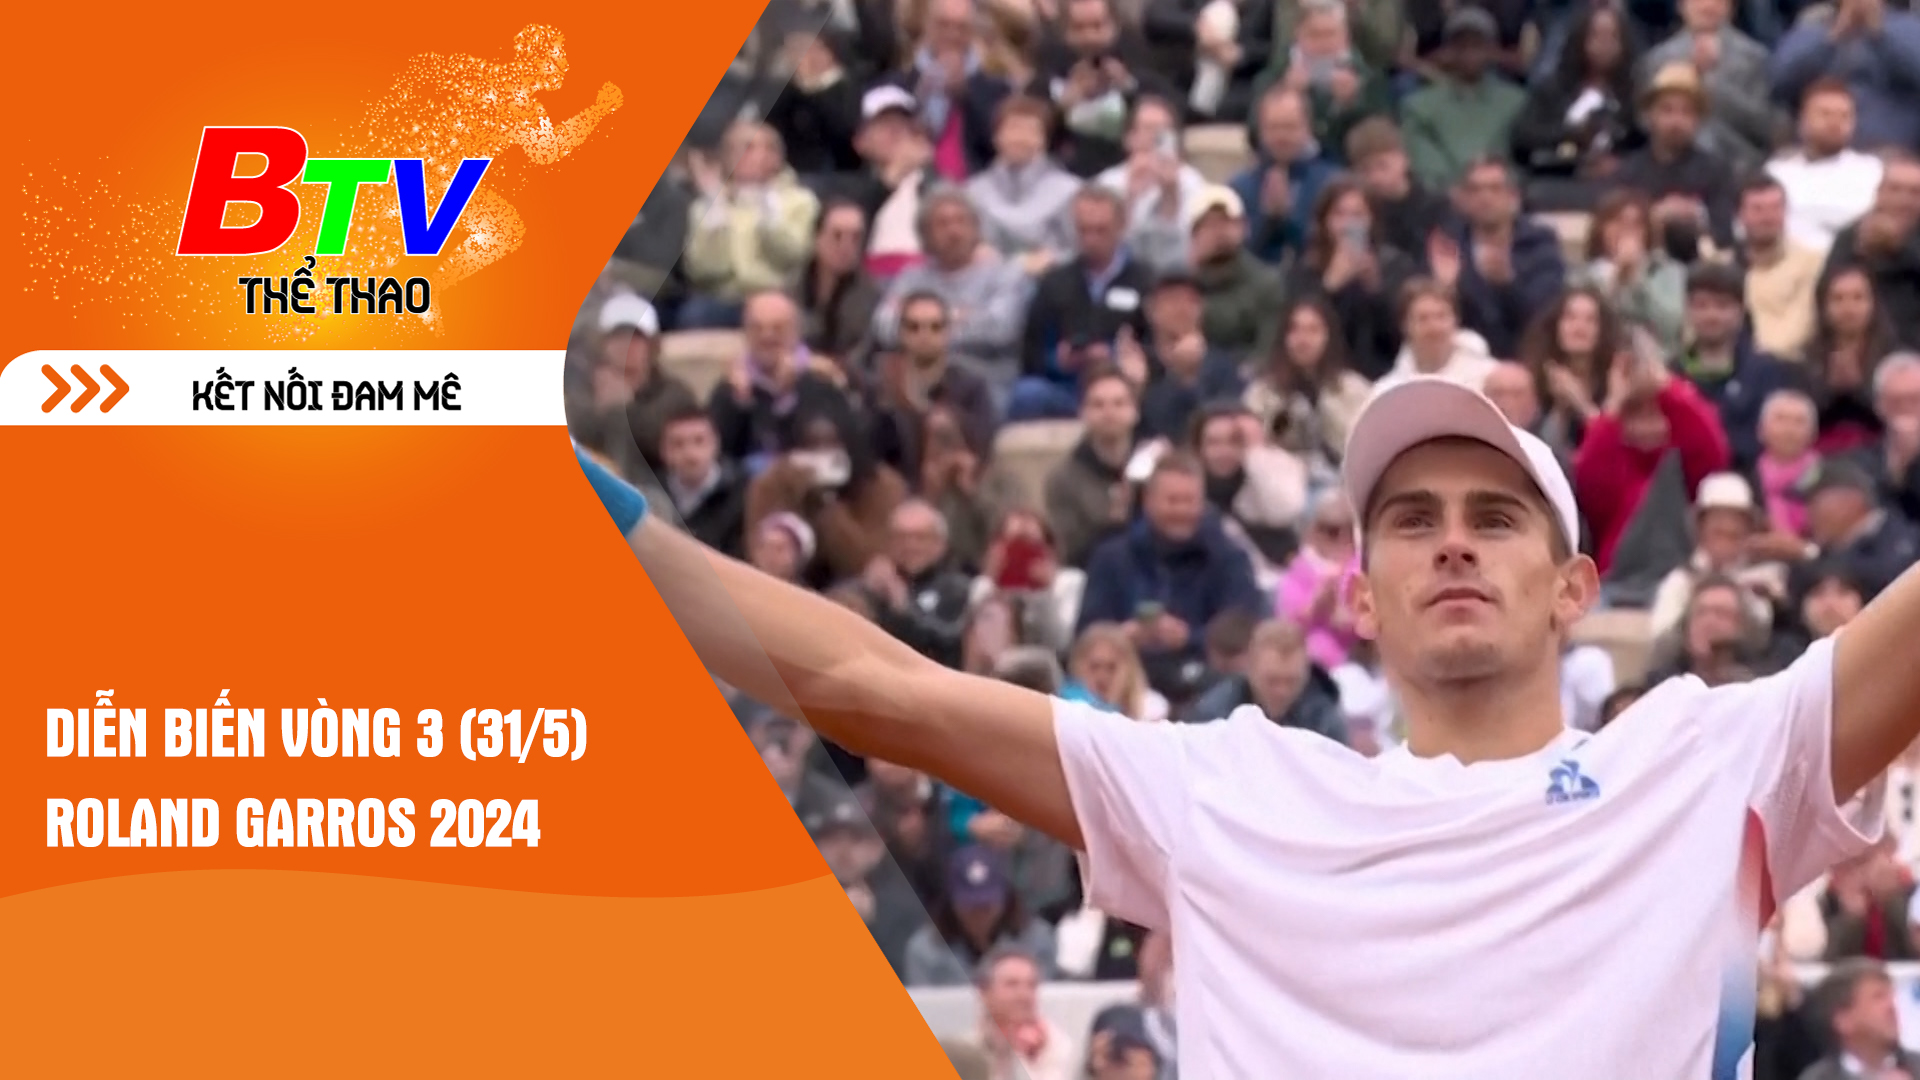 Diễn biến vòng 3 (31/5) Roland Garros 2024 | Tin Thể thao 24h